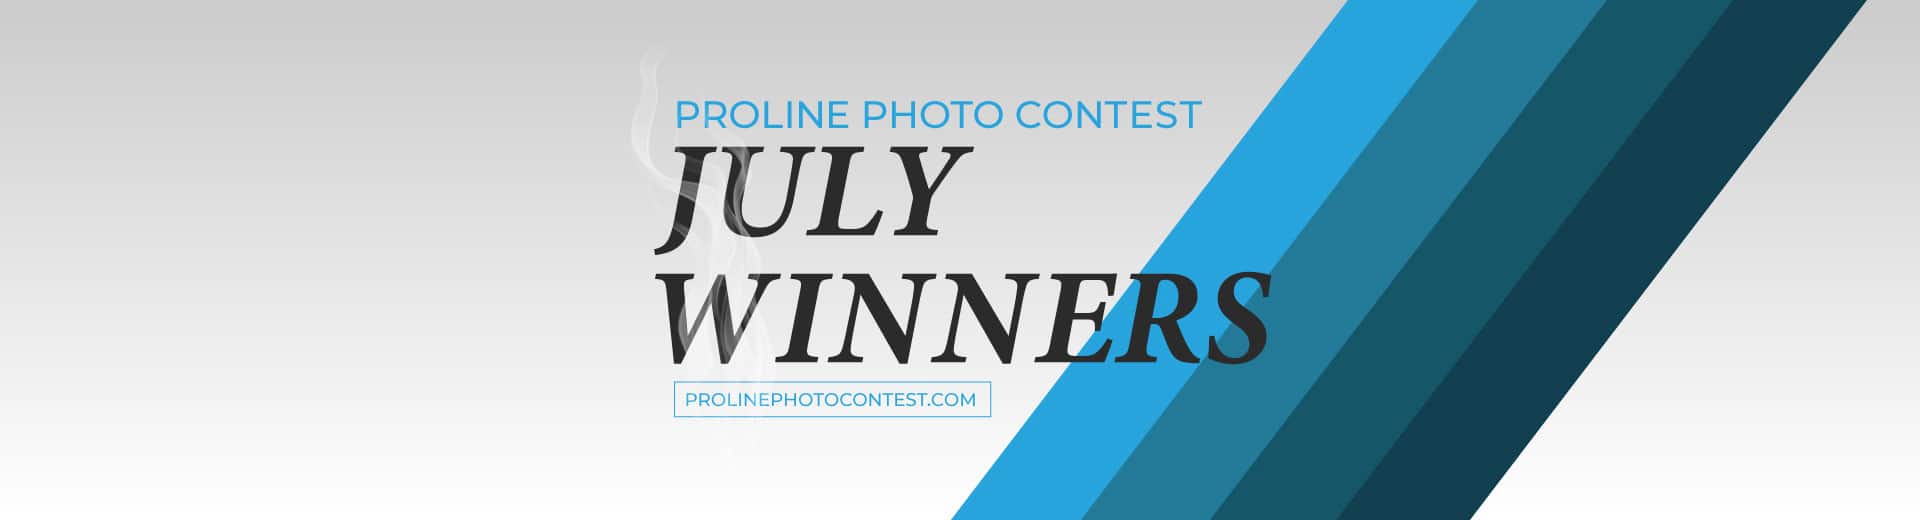 Proline Photo Contest July Winners